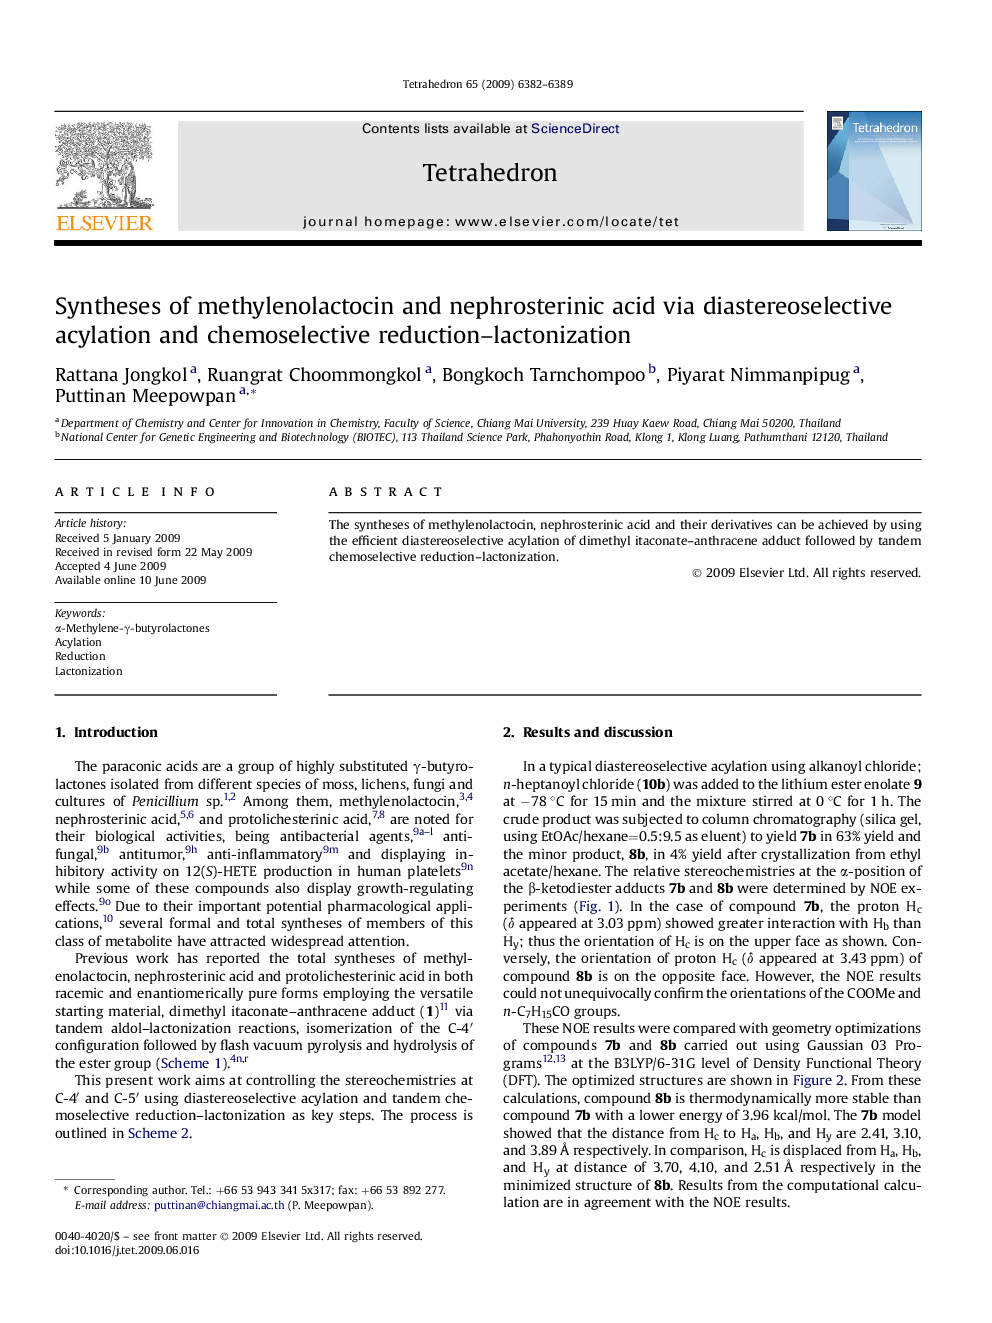 Syntheses of methylenolactocin and nephrosterinic acid via diastereoselective acylation and chemoselective reduction-lactonization